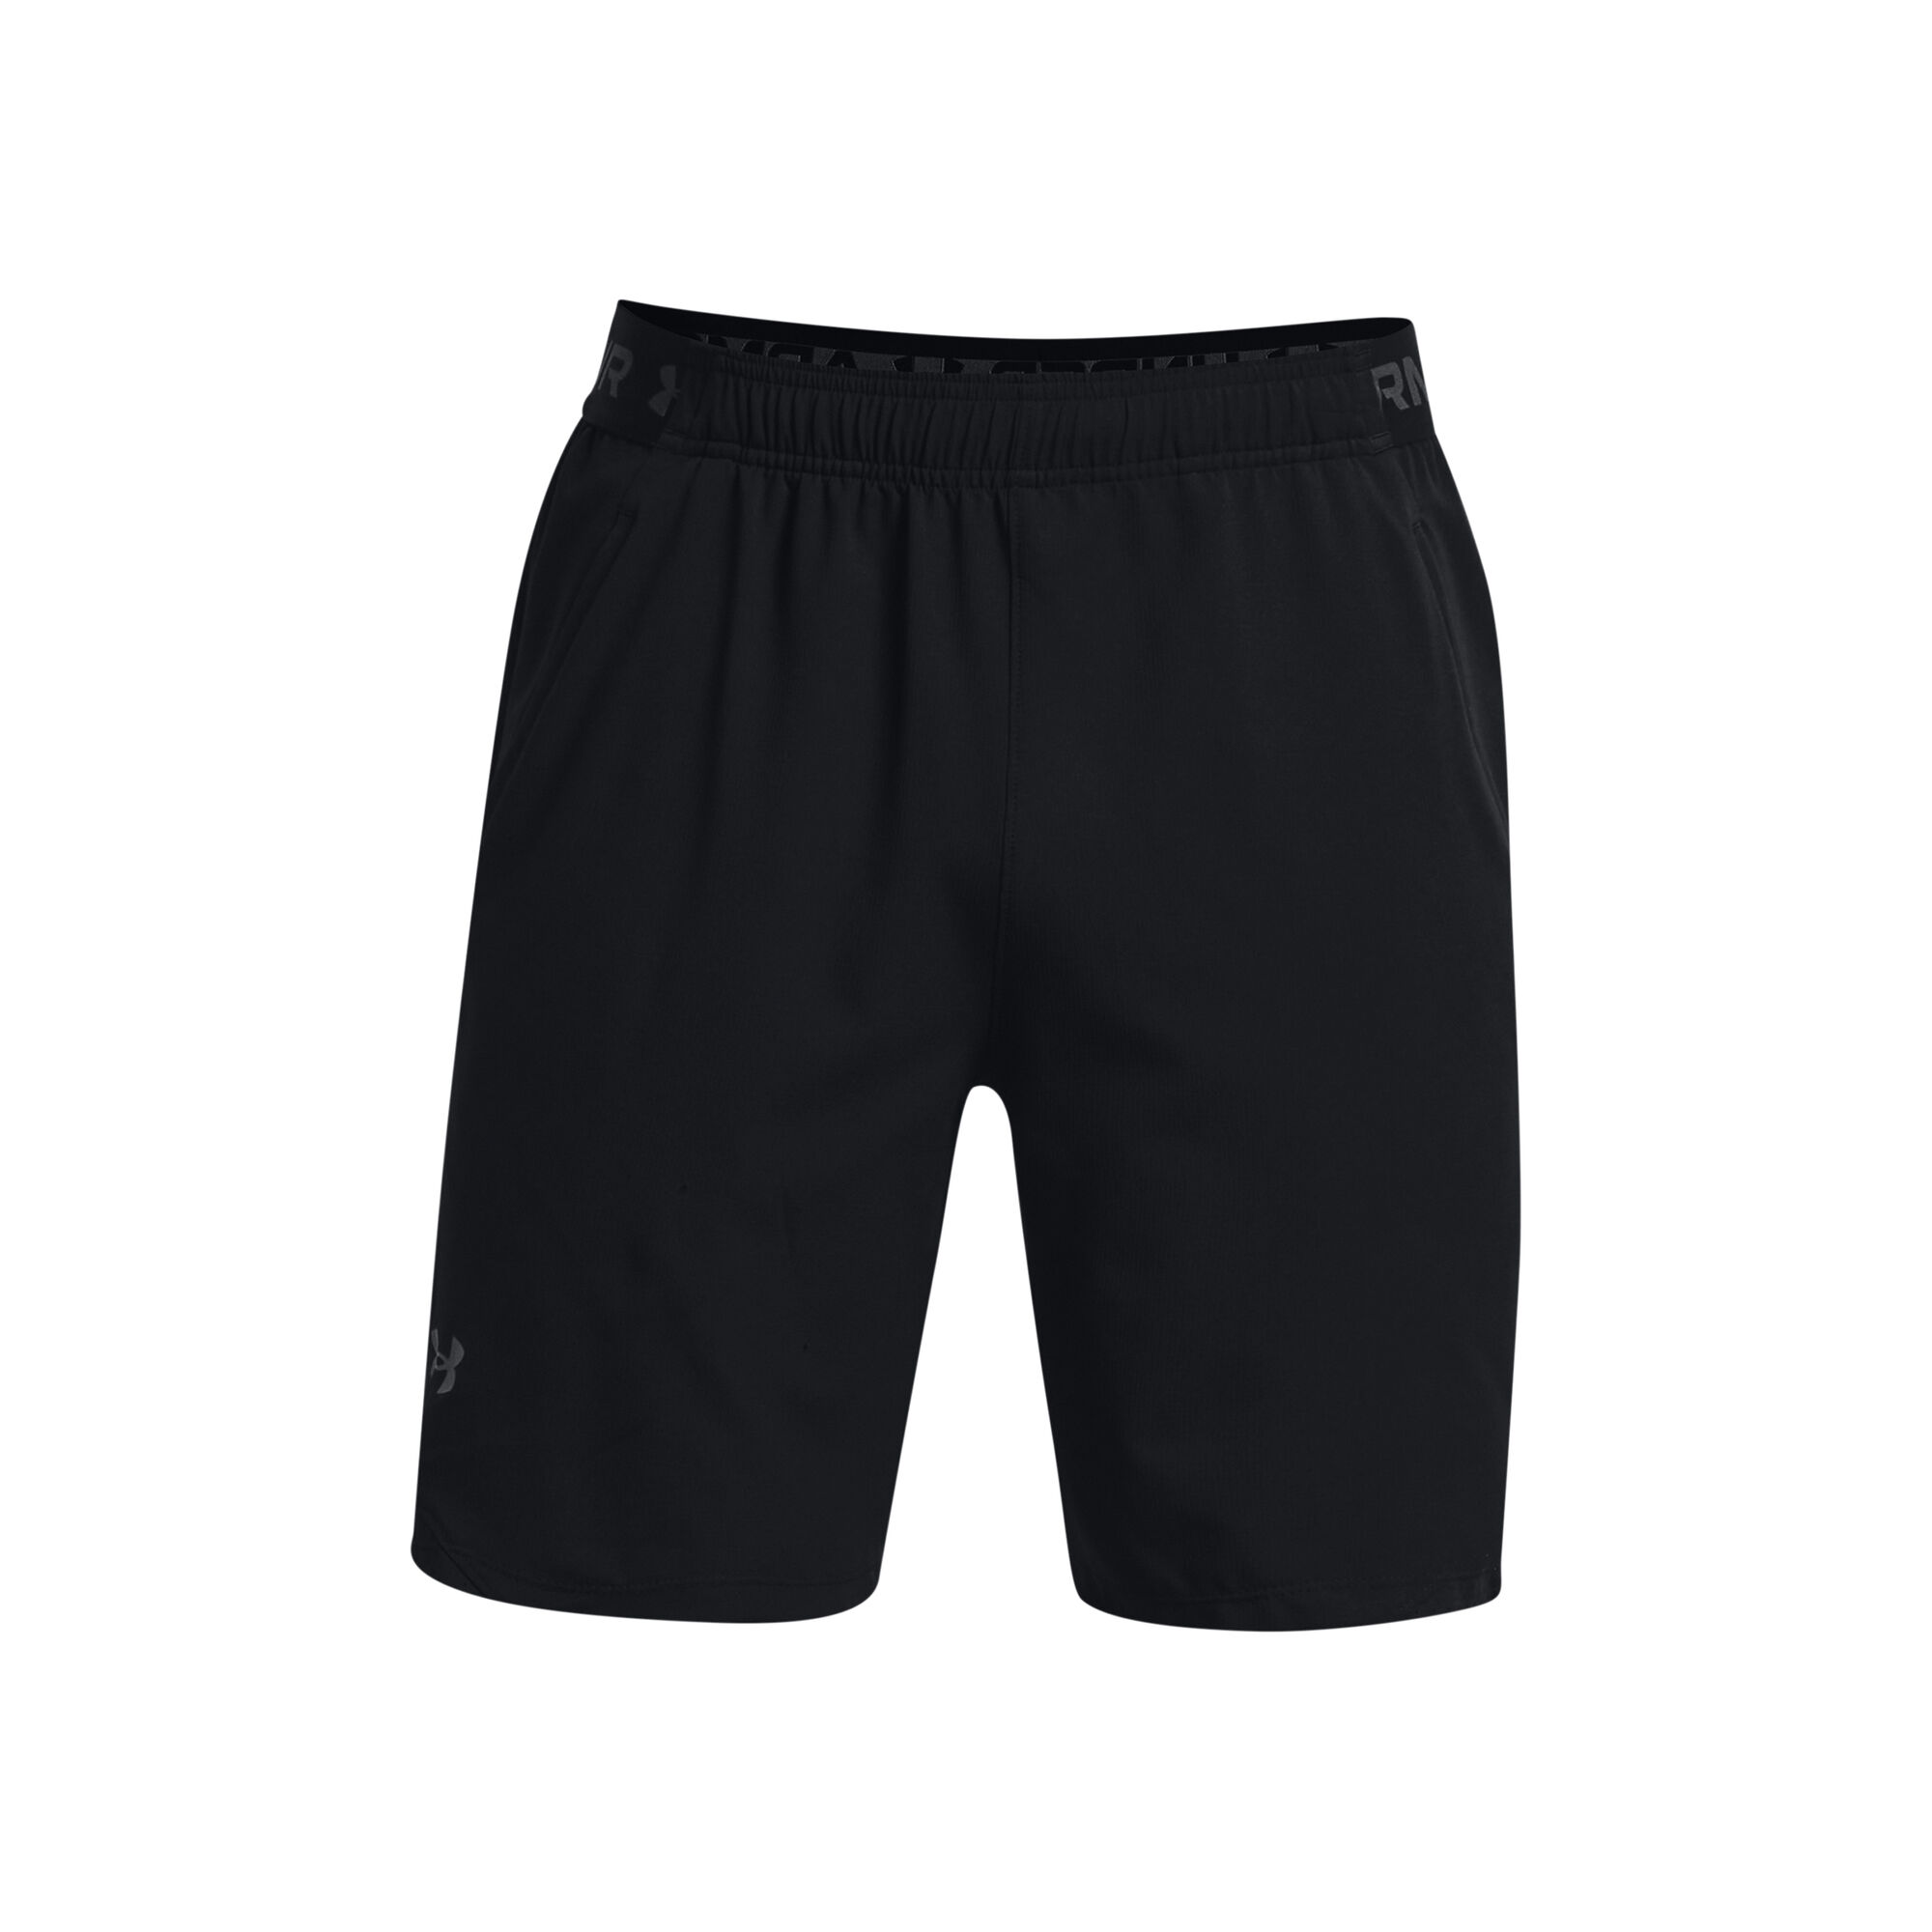 Buy Under Armour Vanish Woven Shorts Men Black online | Tennis Point COM